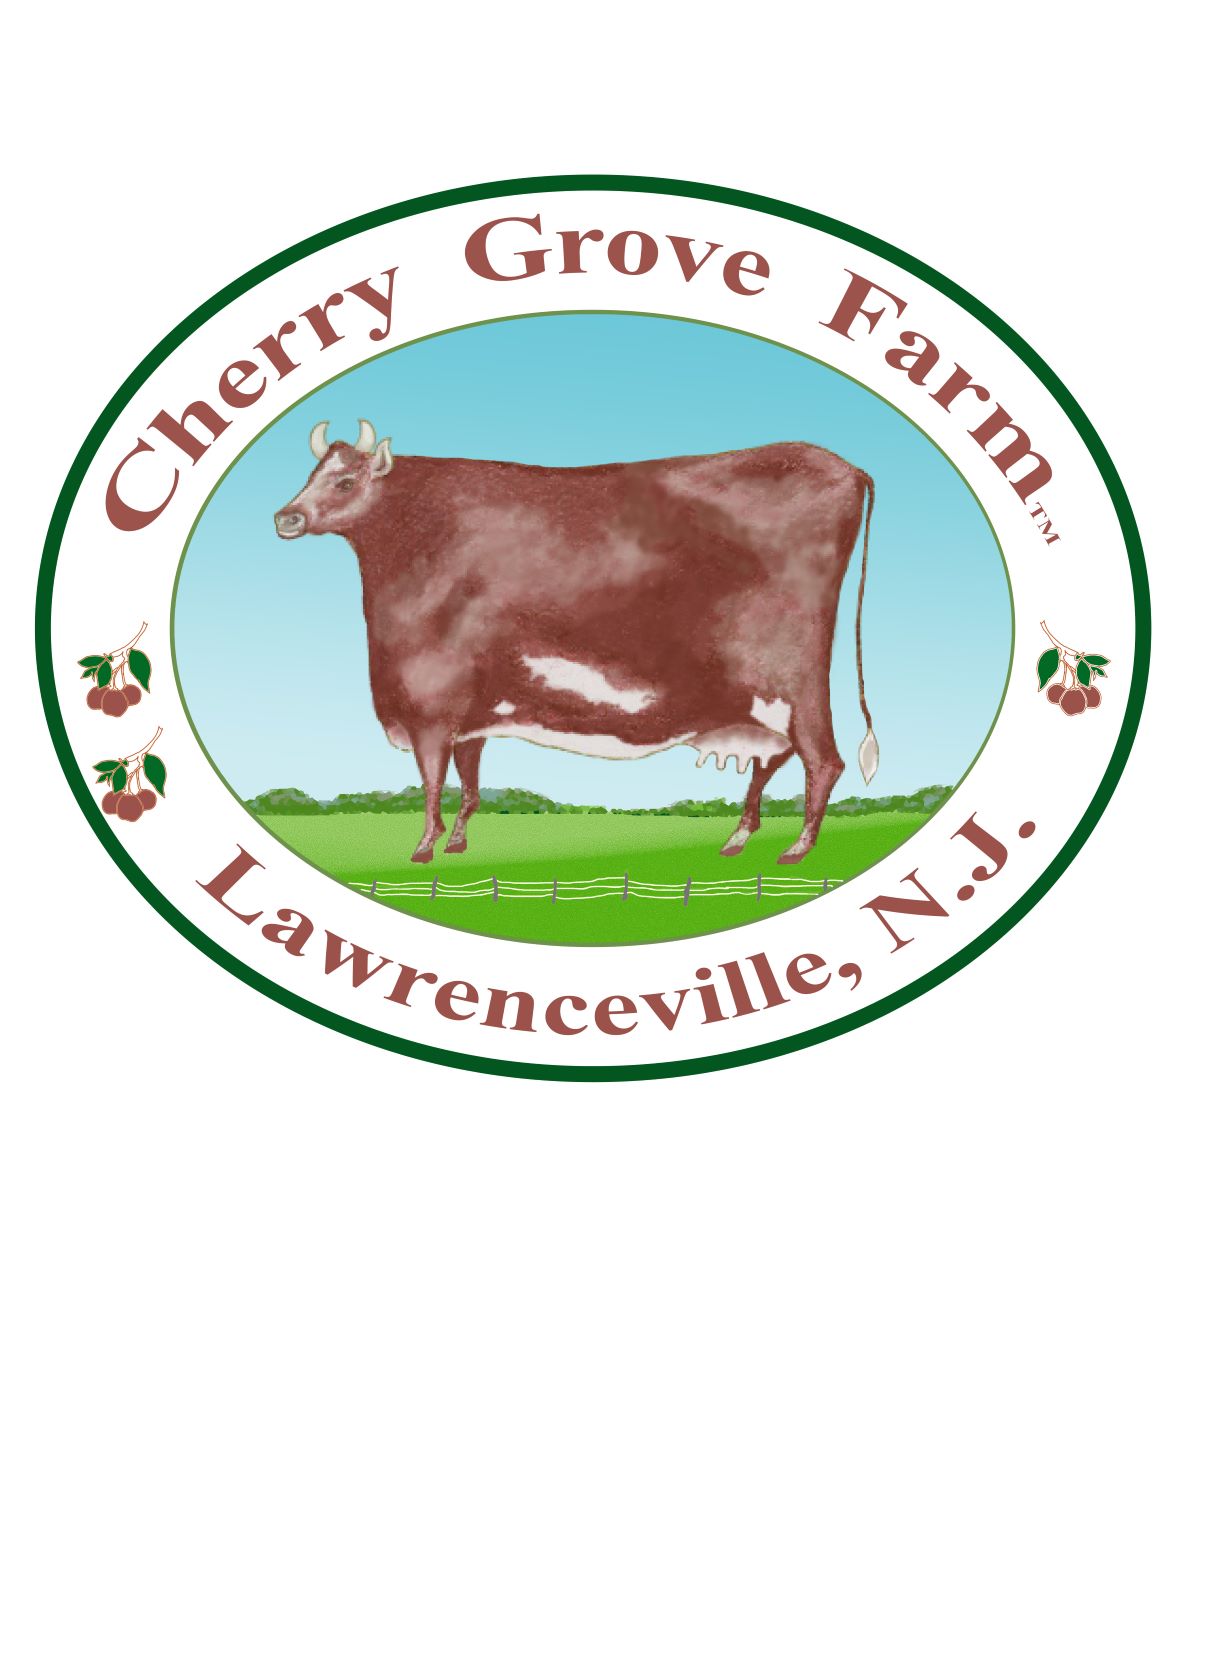 Cherry Grove Farm looking for help!